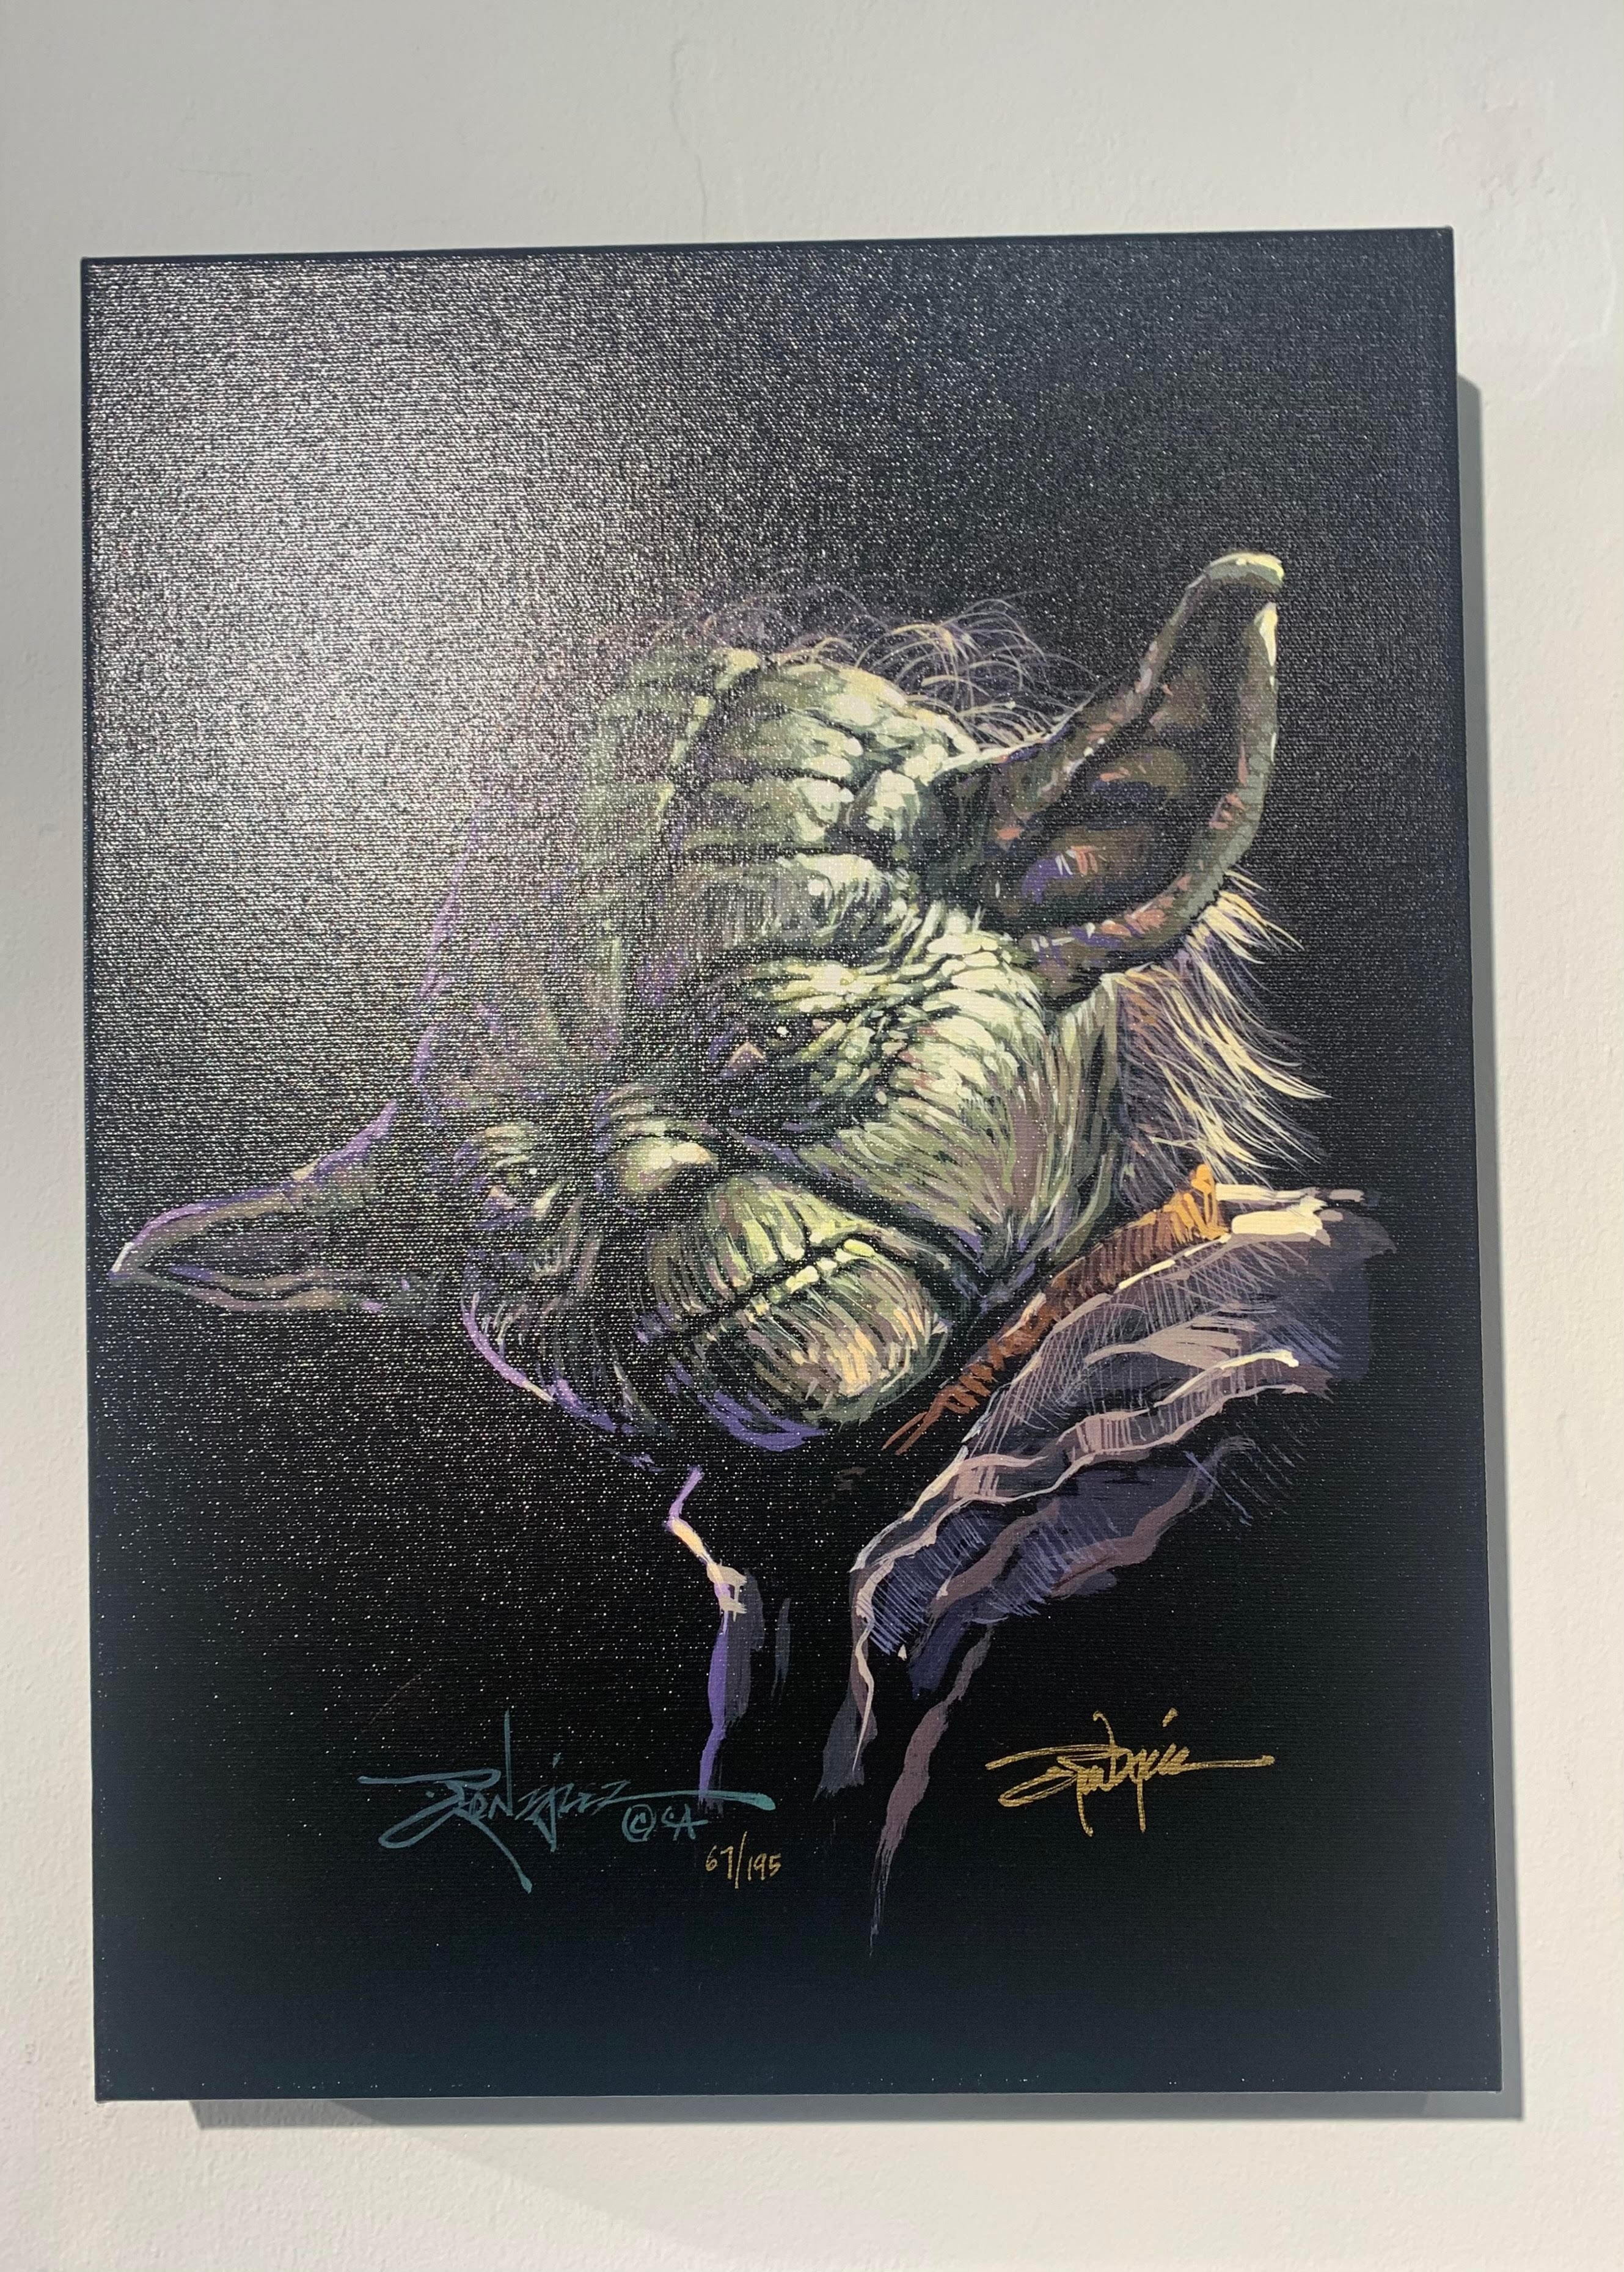 Portrait of Yoda